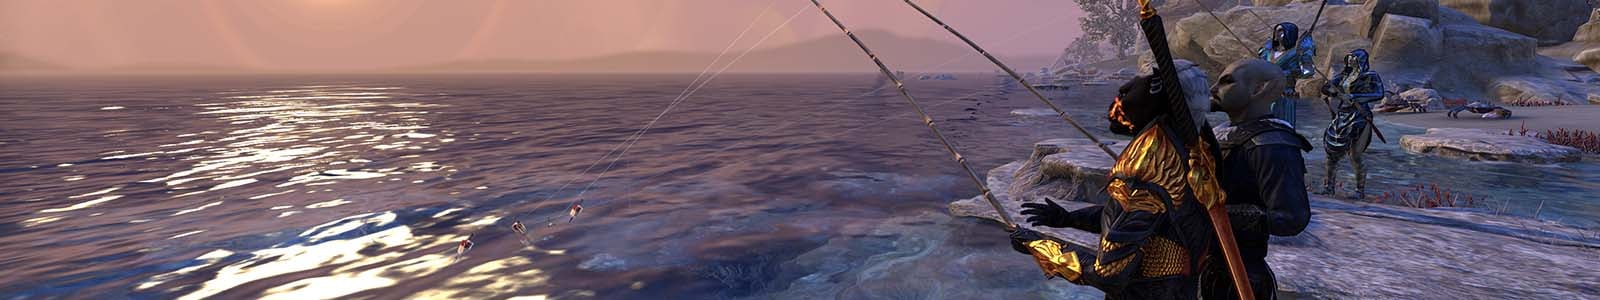 Fishing Guide - Elder Scrolls Online header